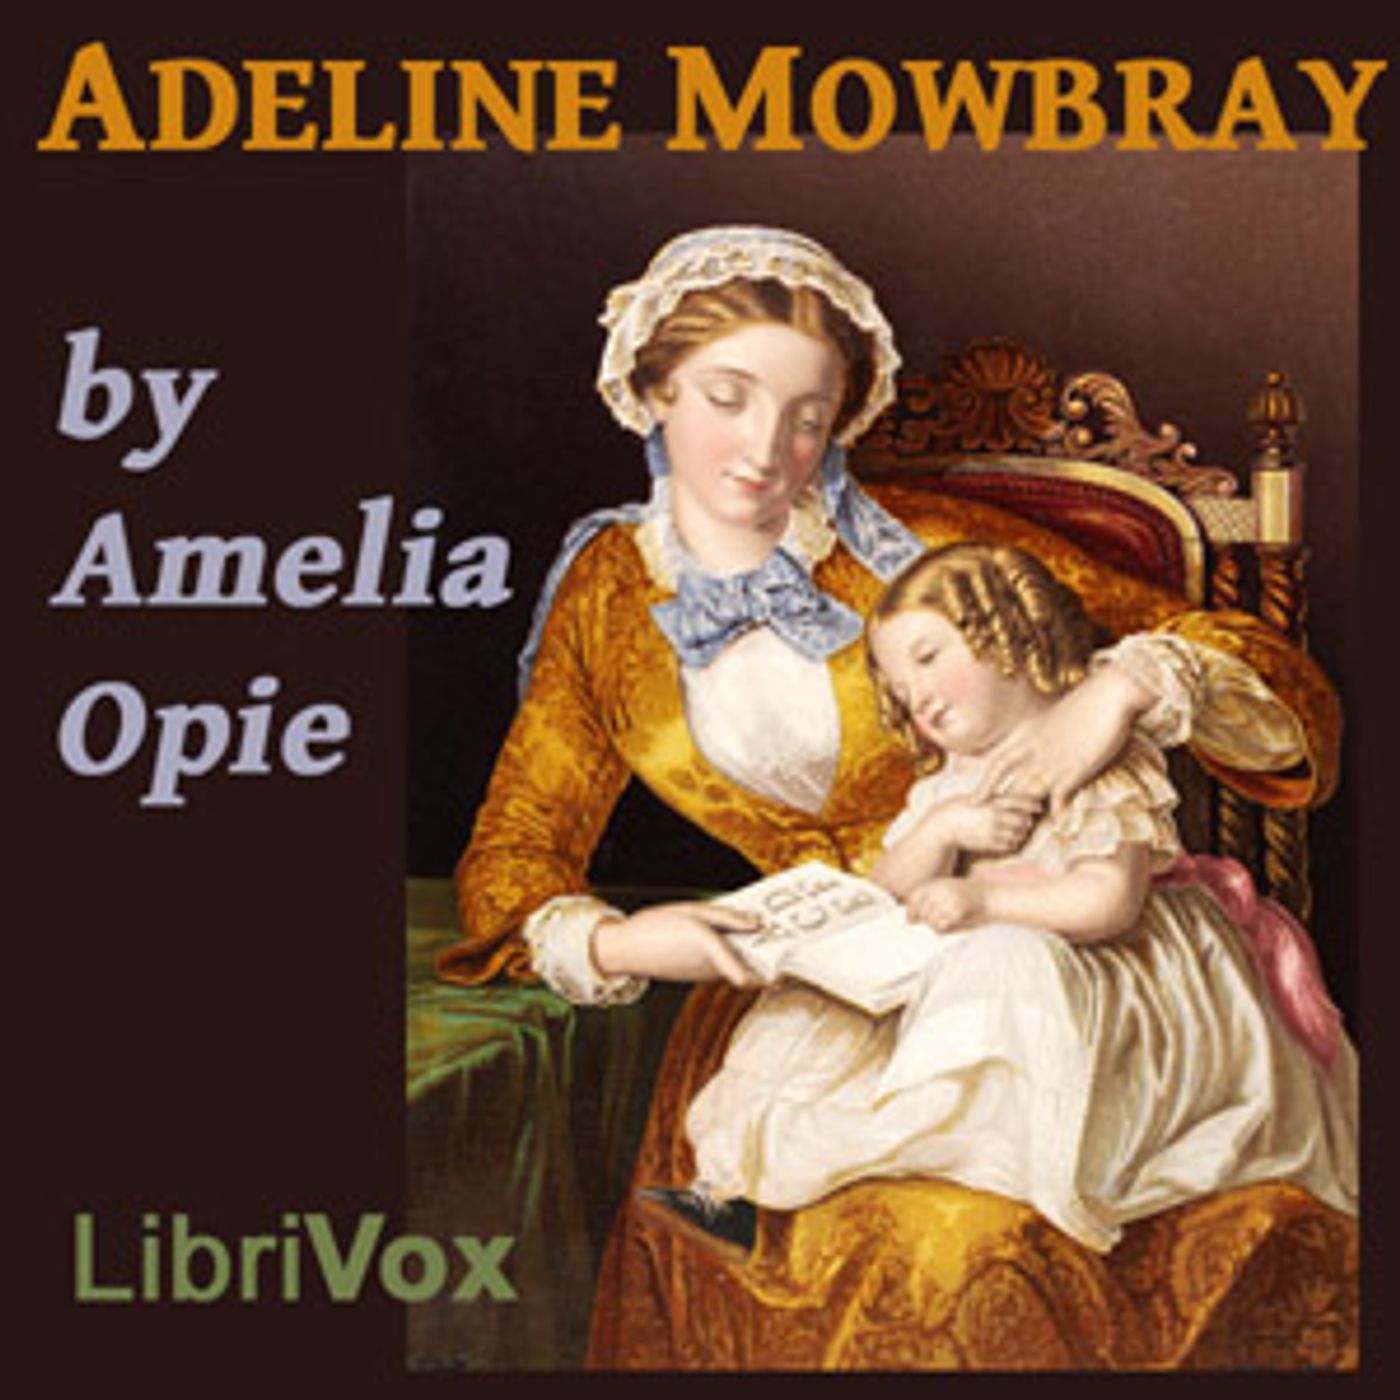 Adeline Mowbray by Amelia Opie (1769 – 1853)